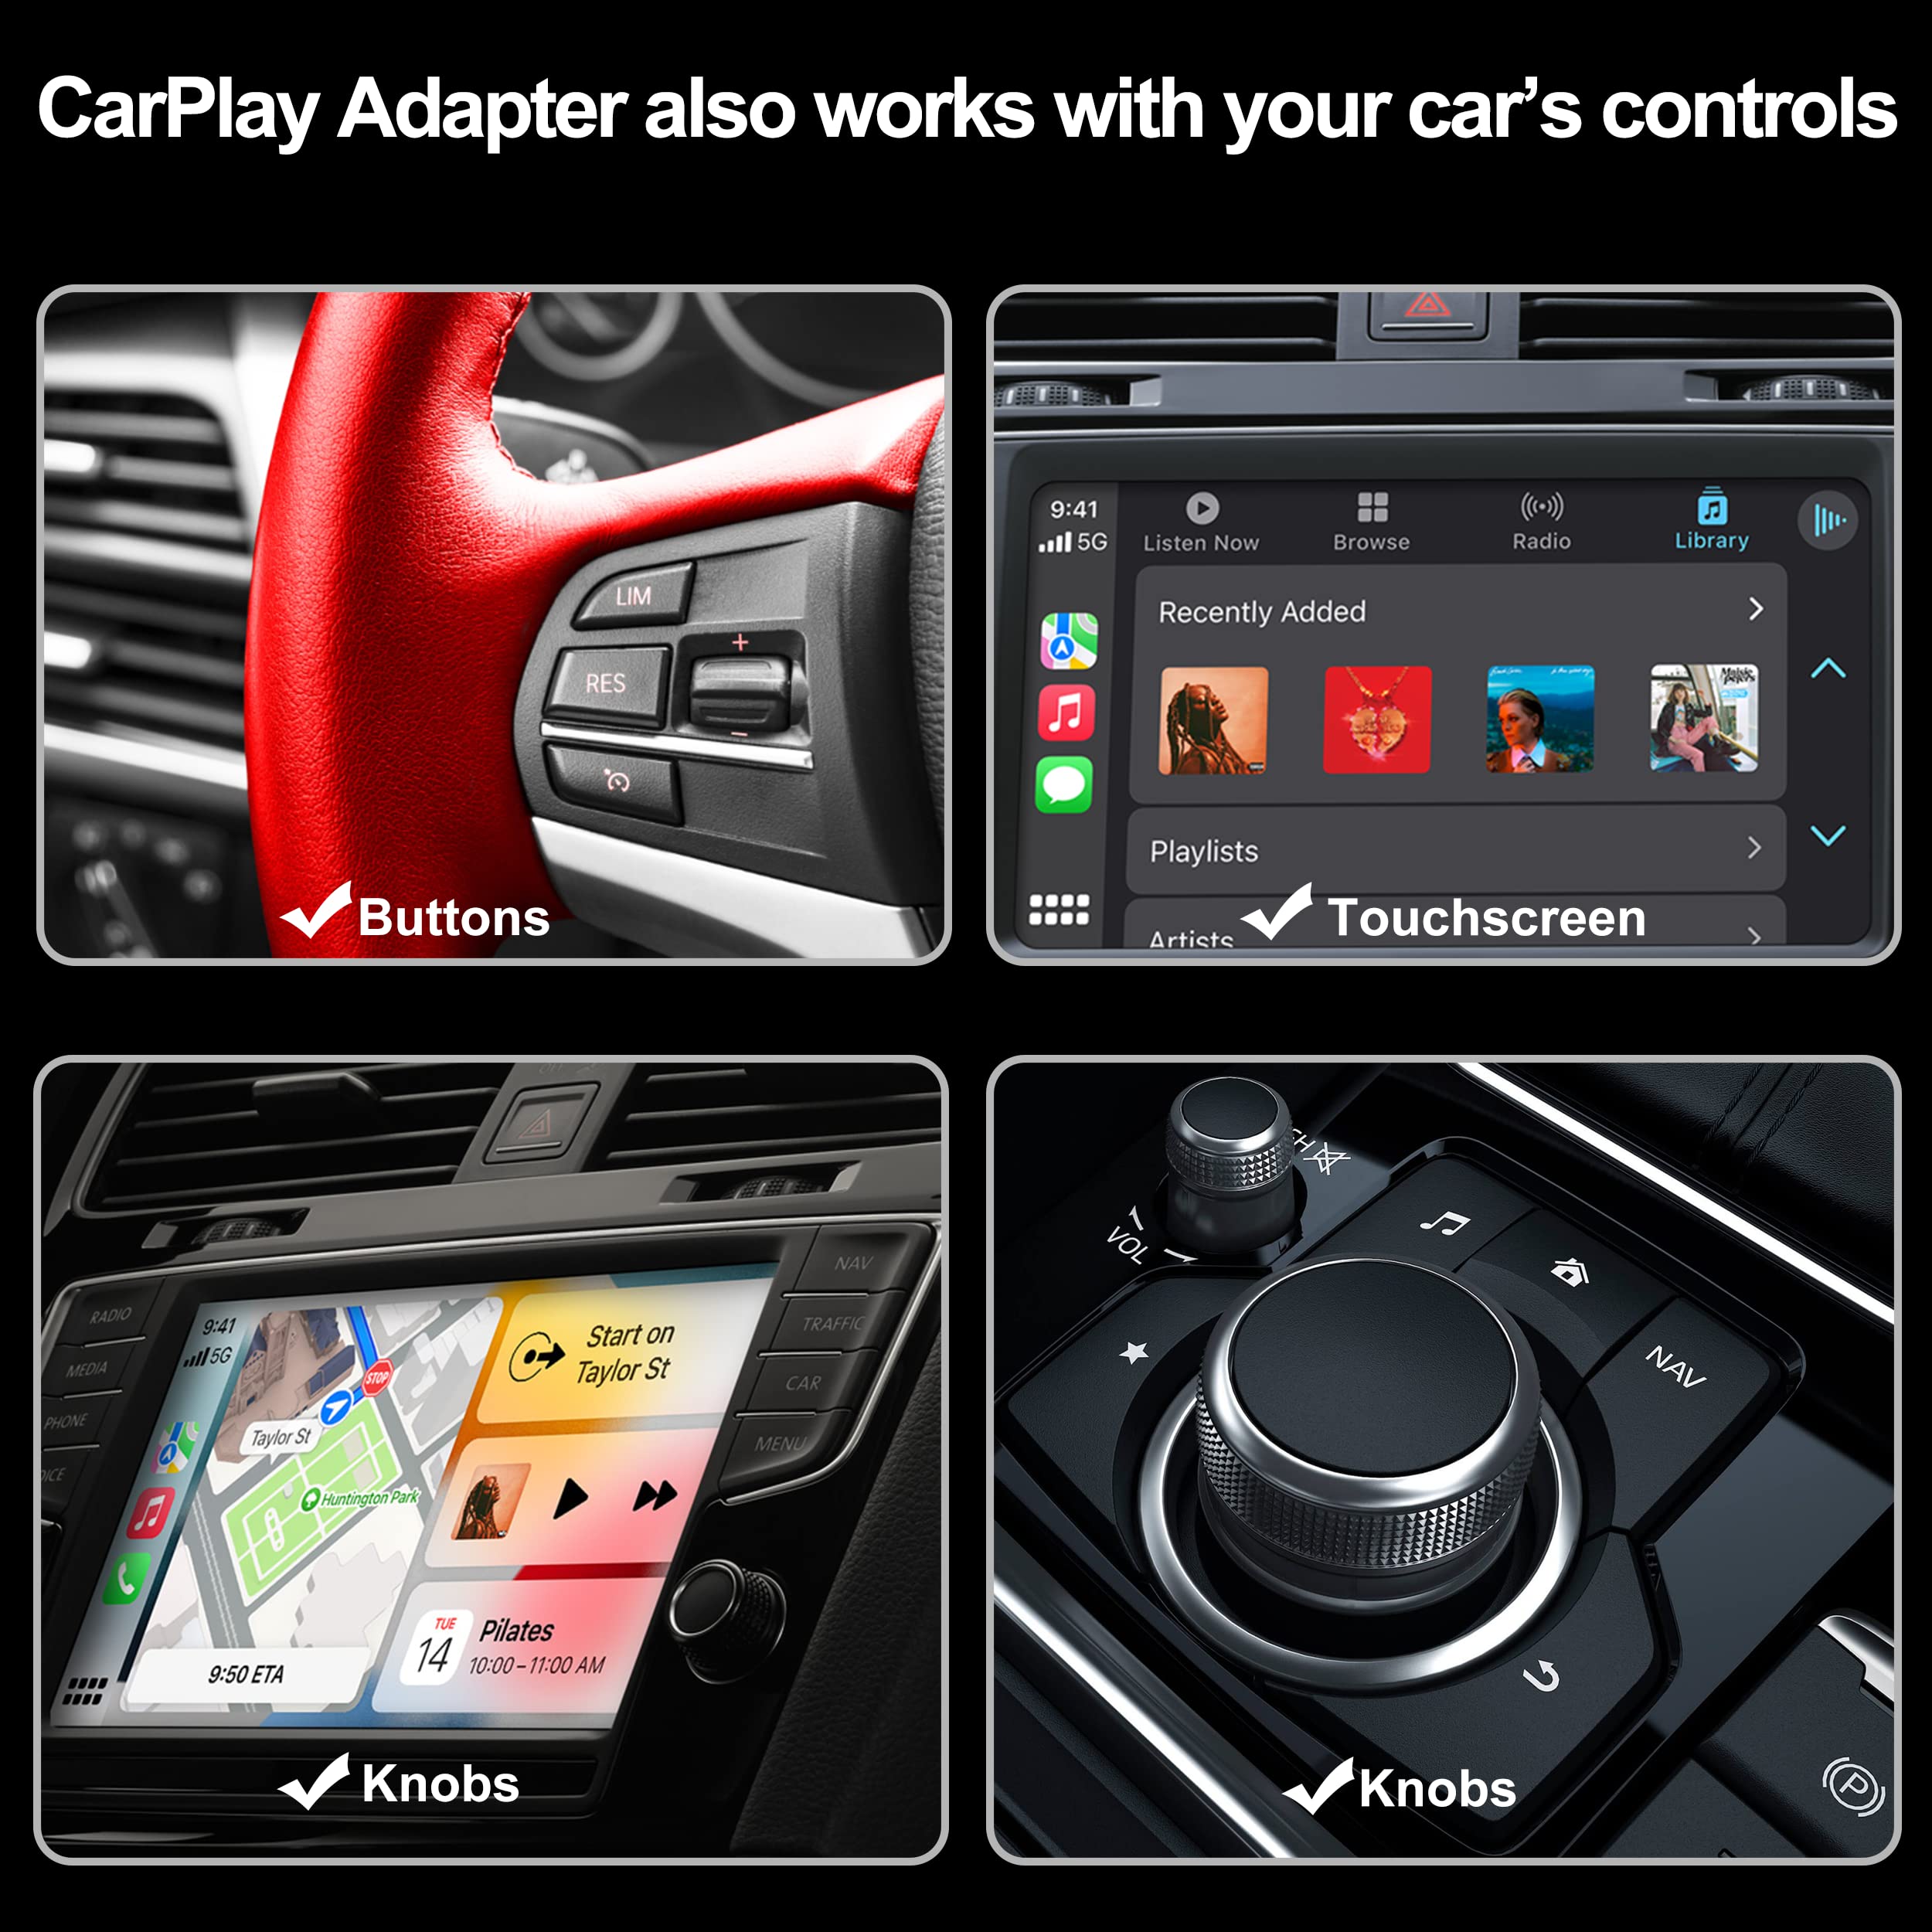 SuperiorTek 3.0 Wireless CarPlay Adapter for All Factory Wired CarPlay Cars Wireless CarPlay Dongle Convert Wired to Wireless CarPlay top1f, Black